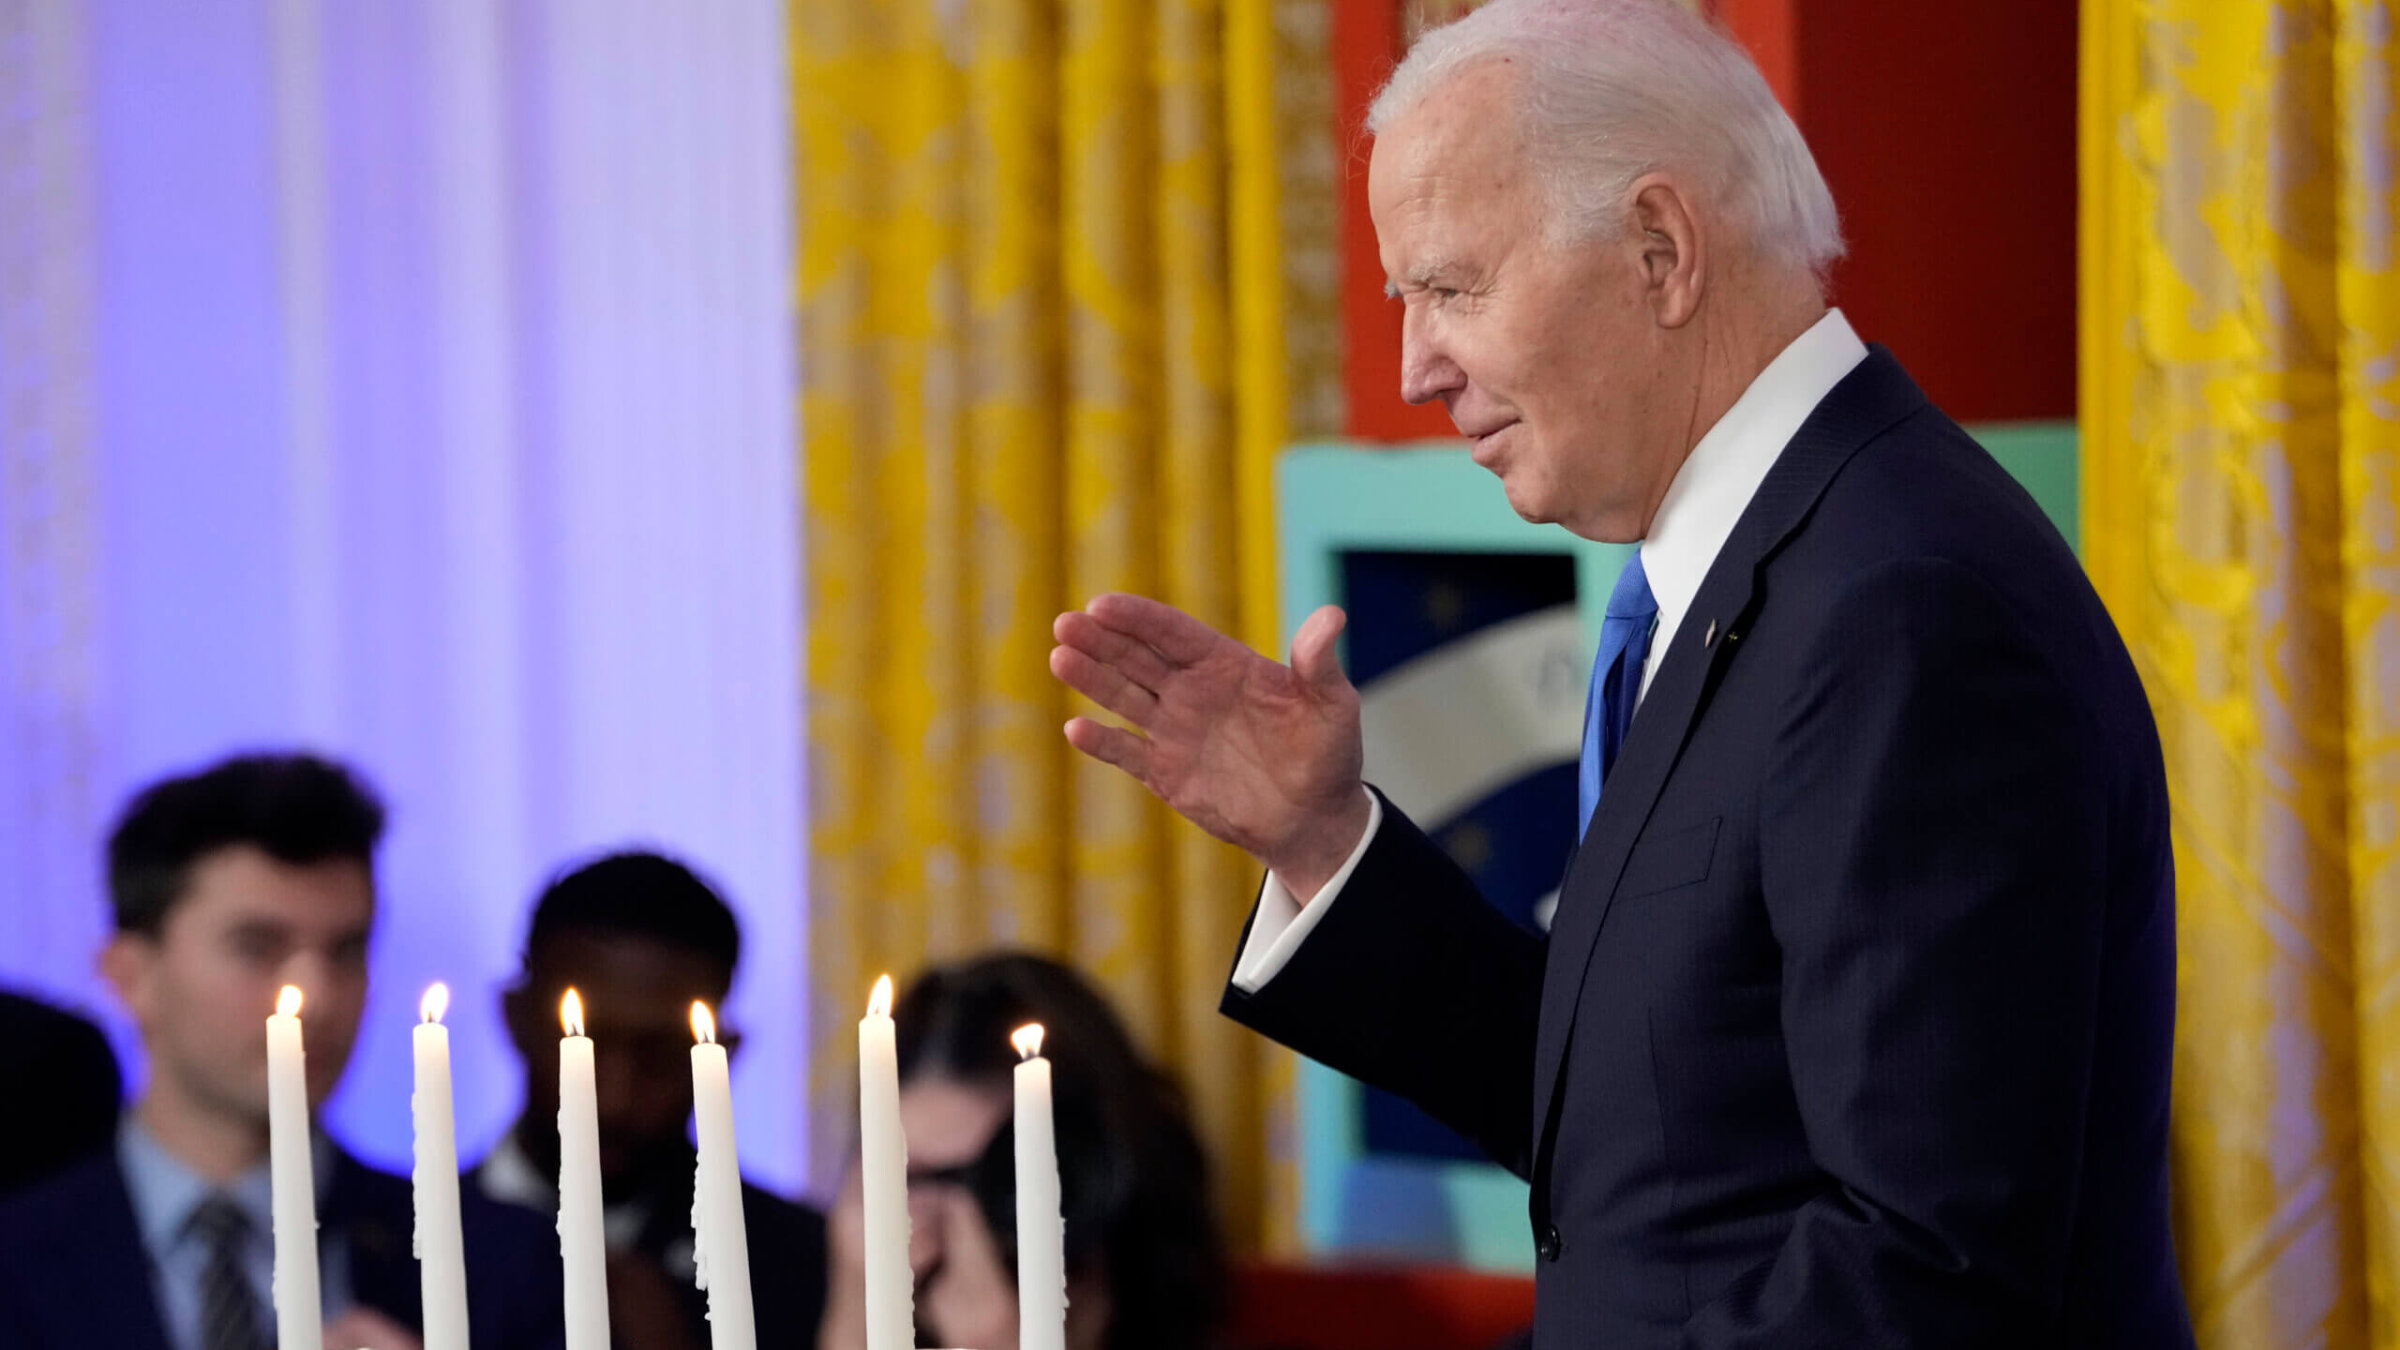 President Joe Biden speaks at a Hanukkah reception in the East Room of the White House on Dec. 11.